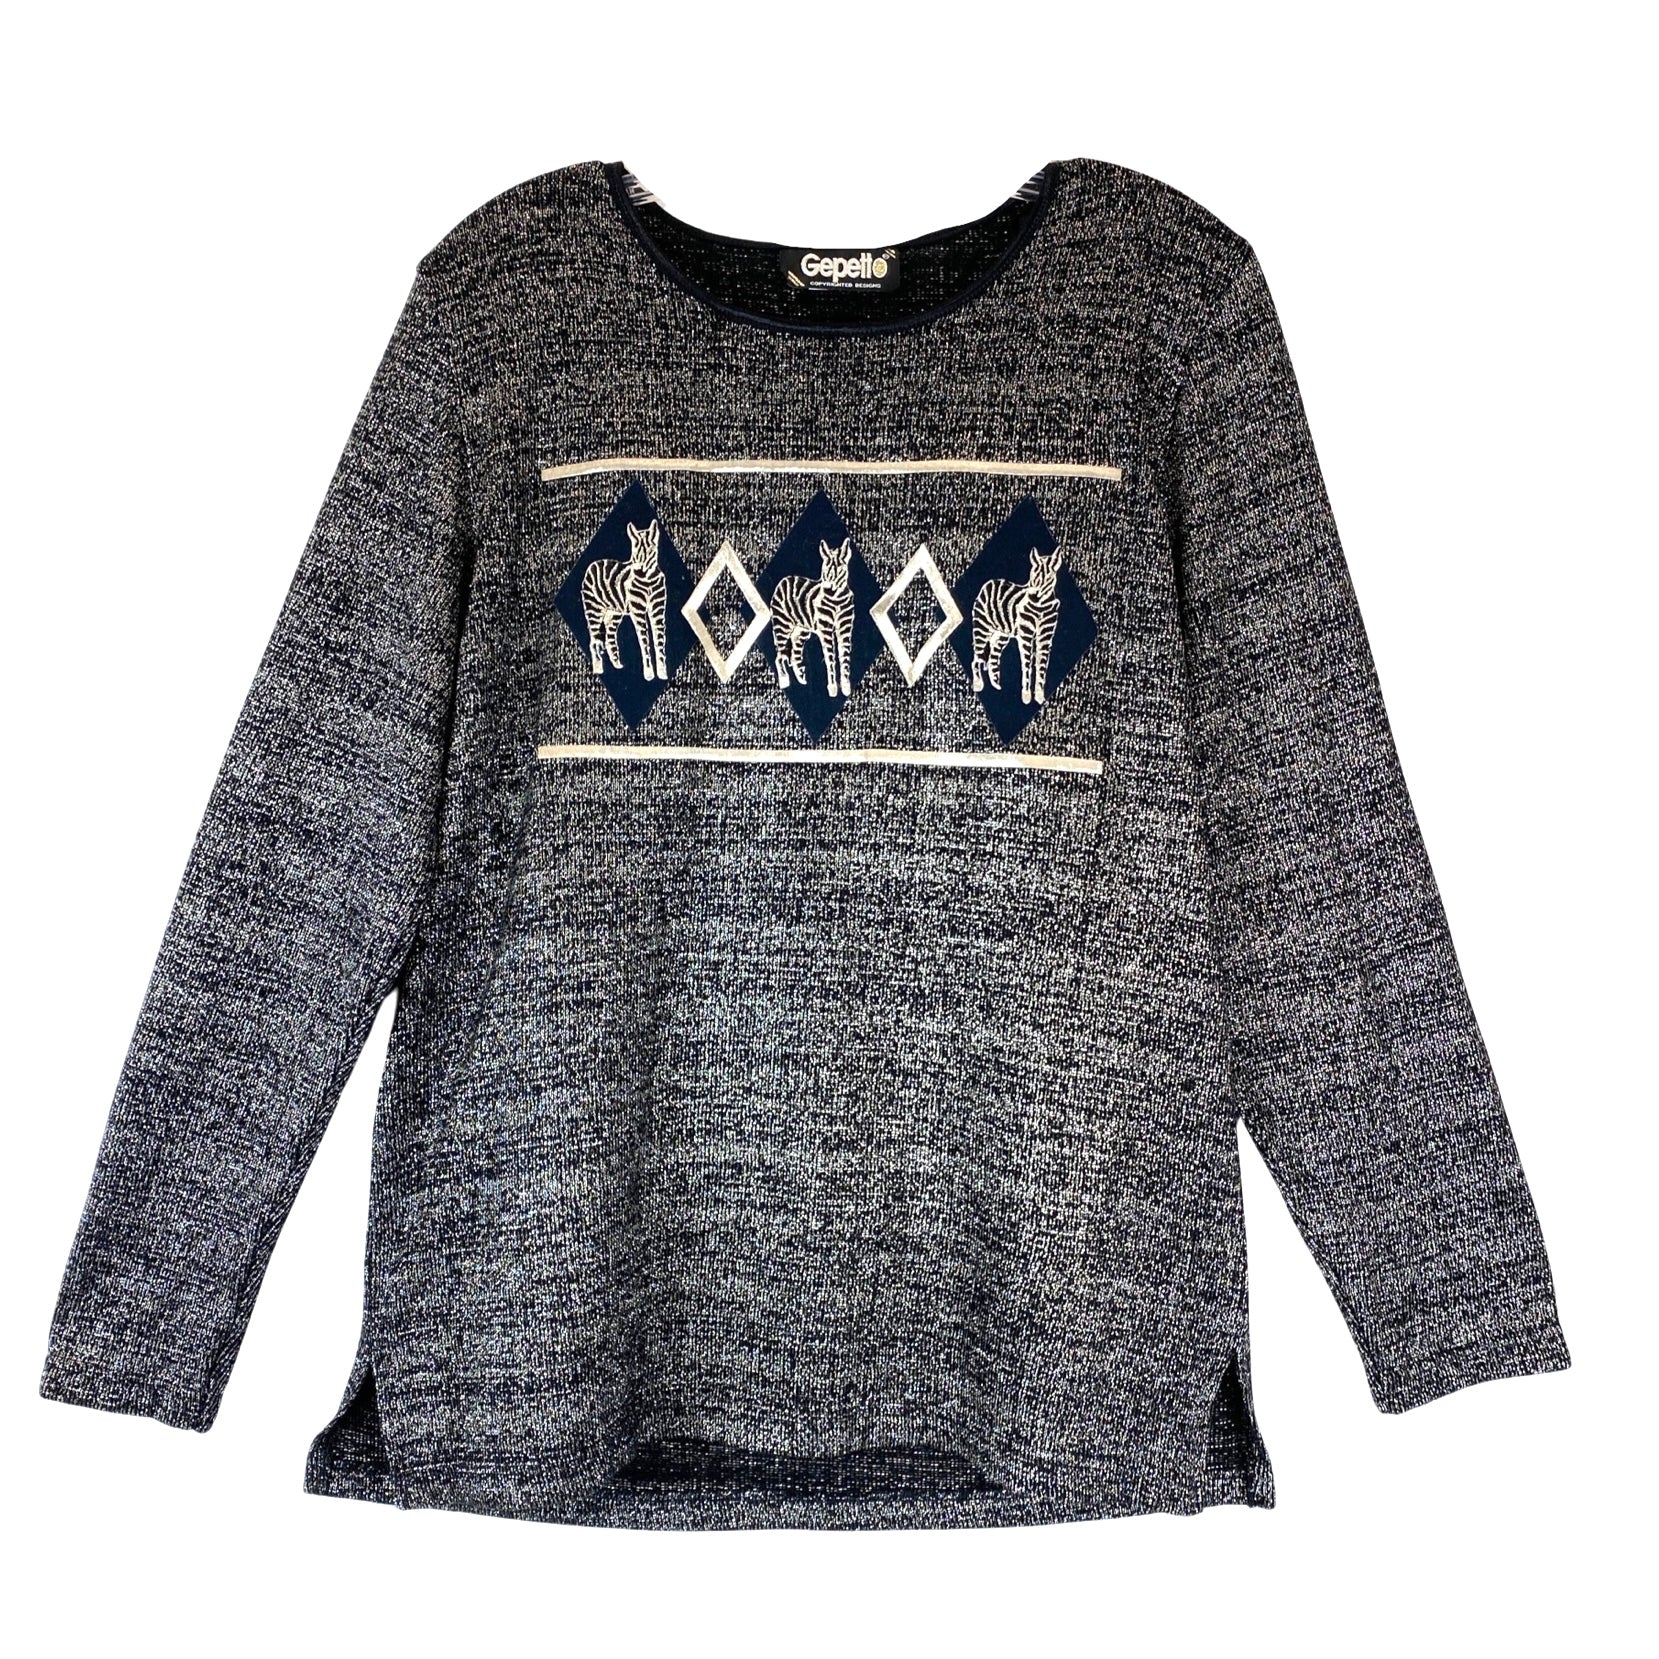 Vintage Gepetto Metallic Embroidered Zebra Sweater